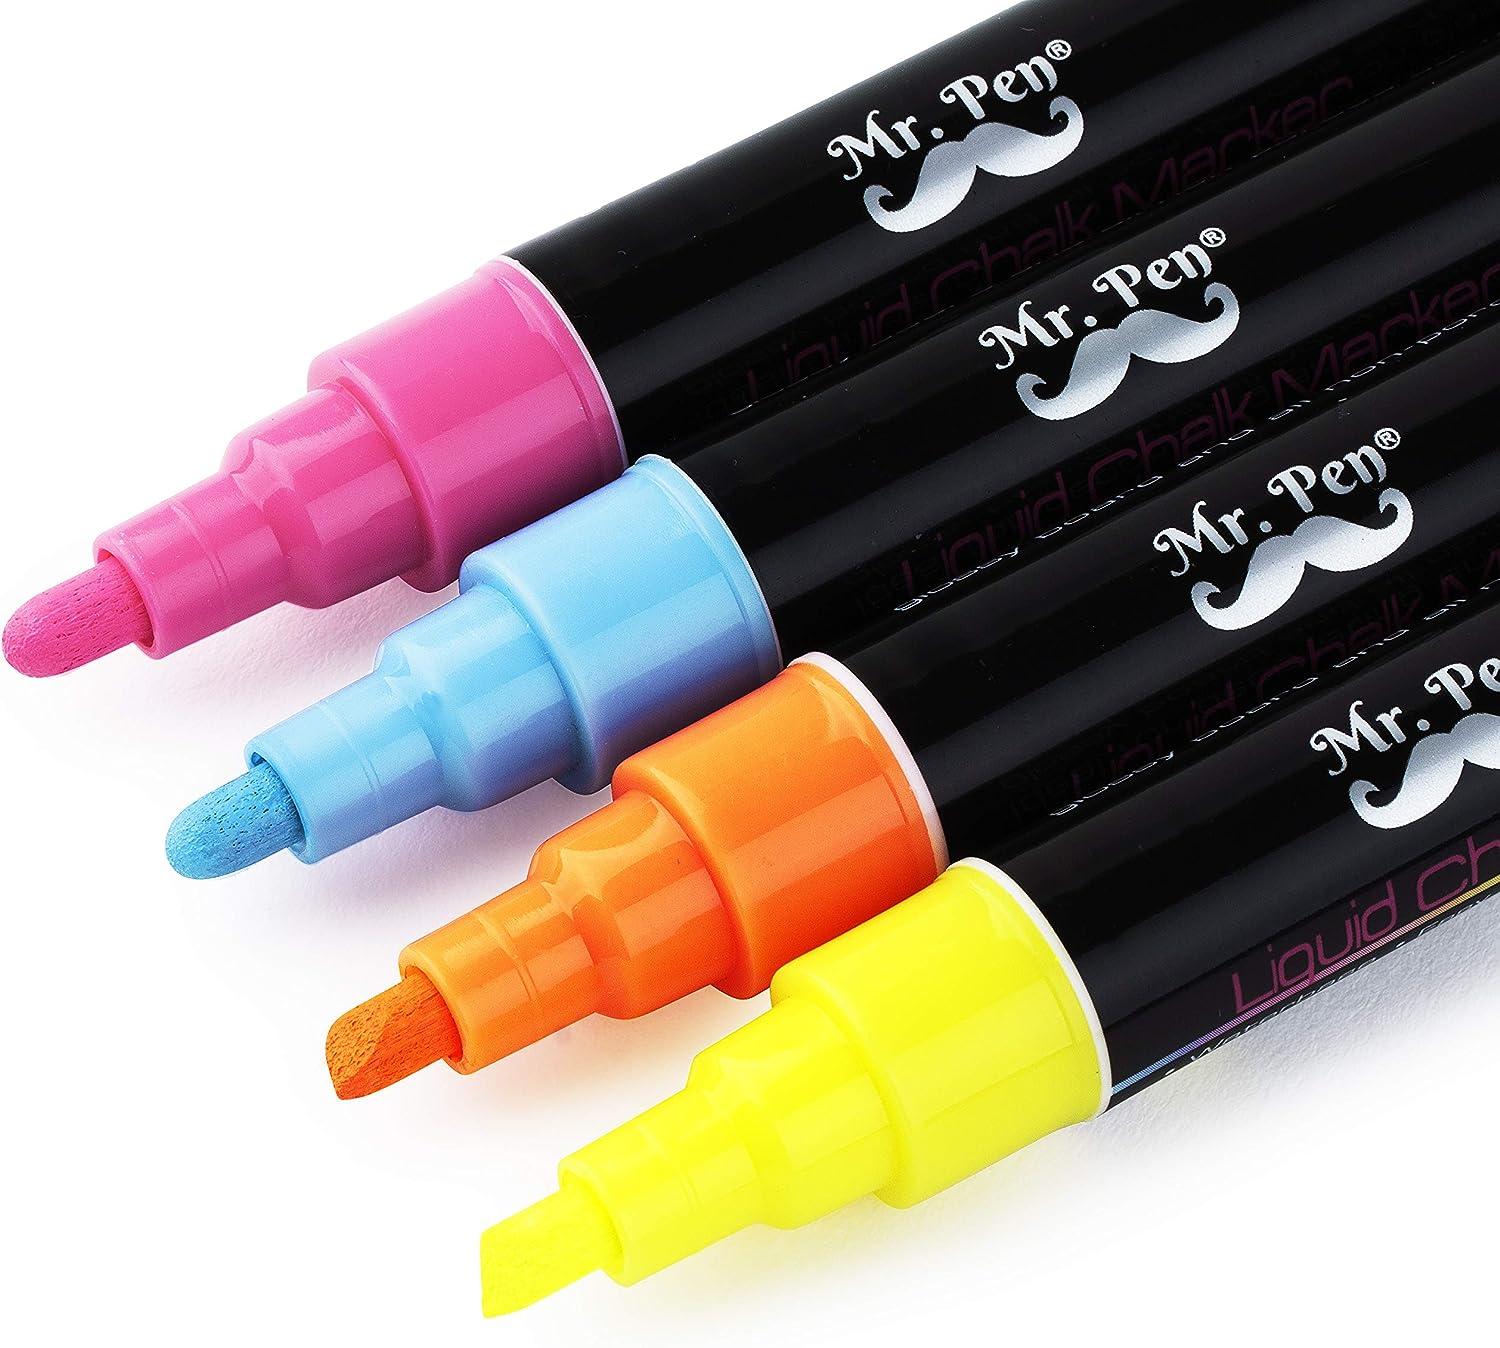 White Liquid Chalk Marker Pen (6 Pack)  Liquid chalk markers, Chalk  markers, Chalkboard pens